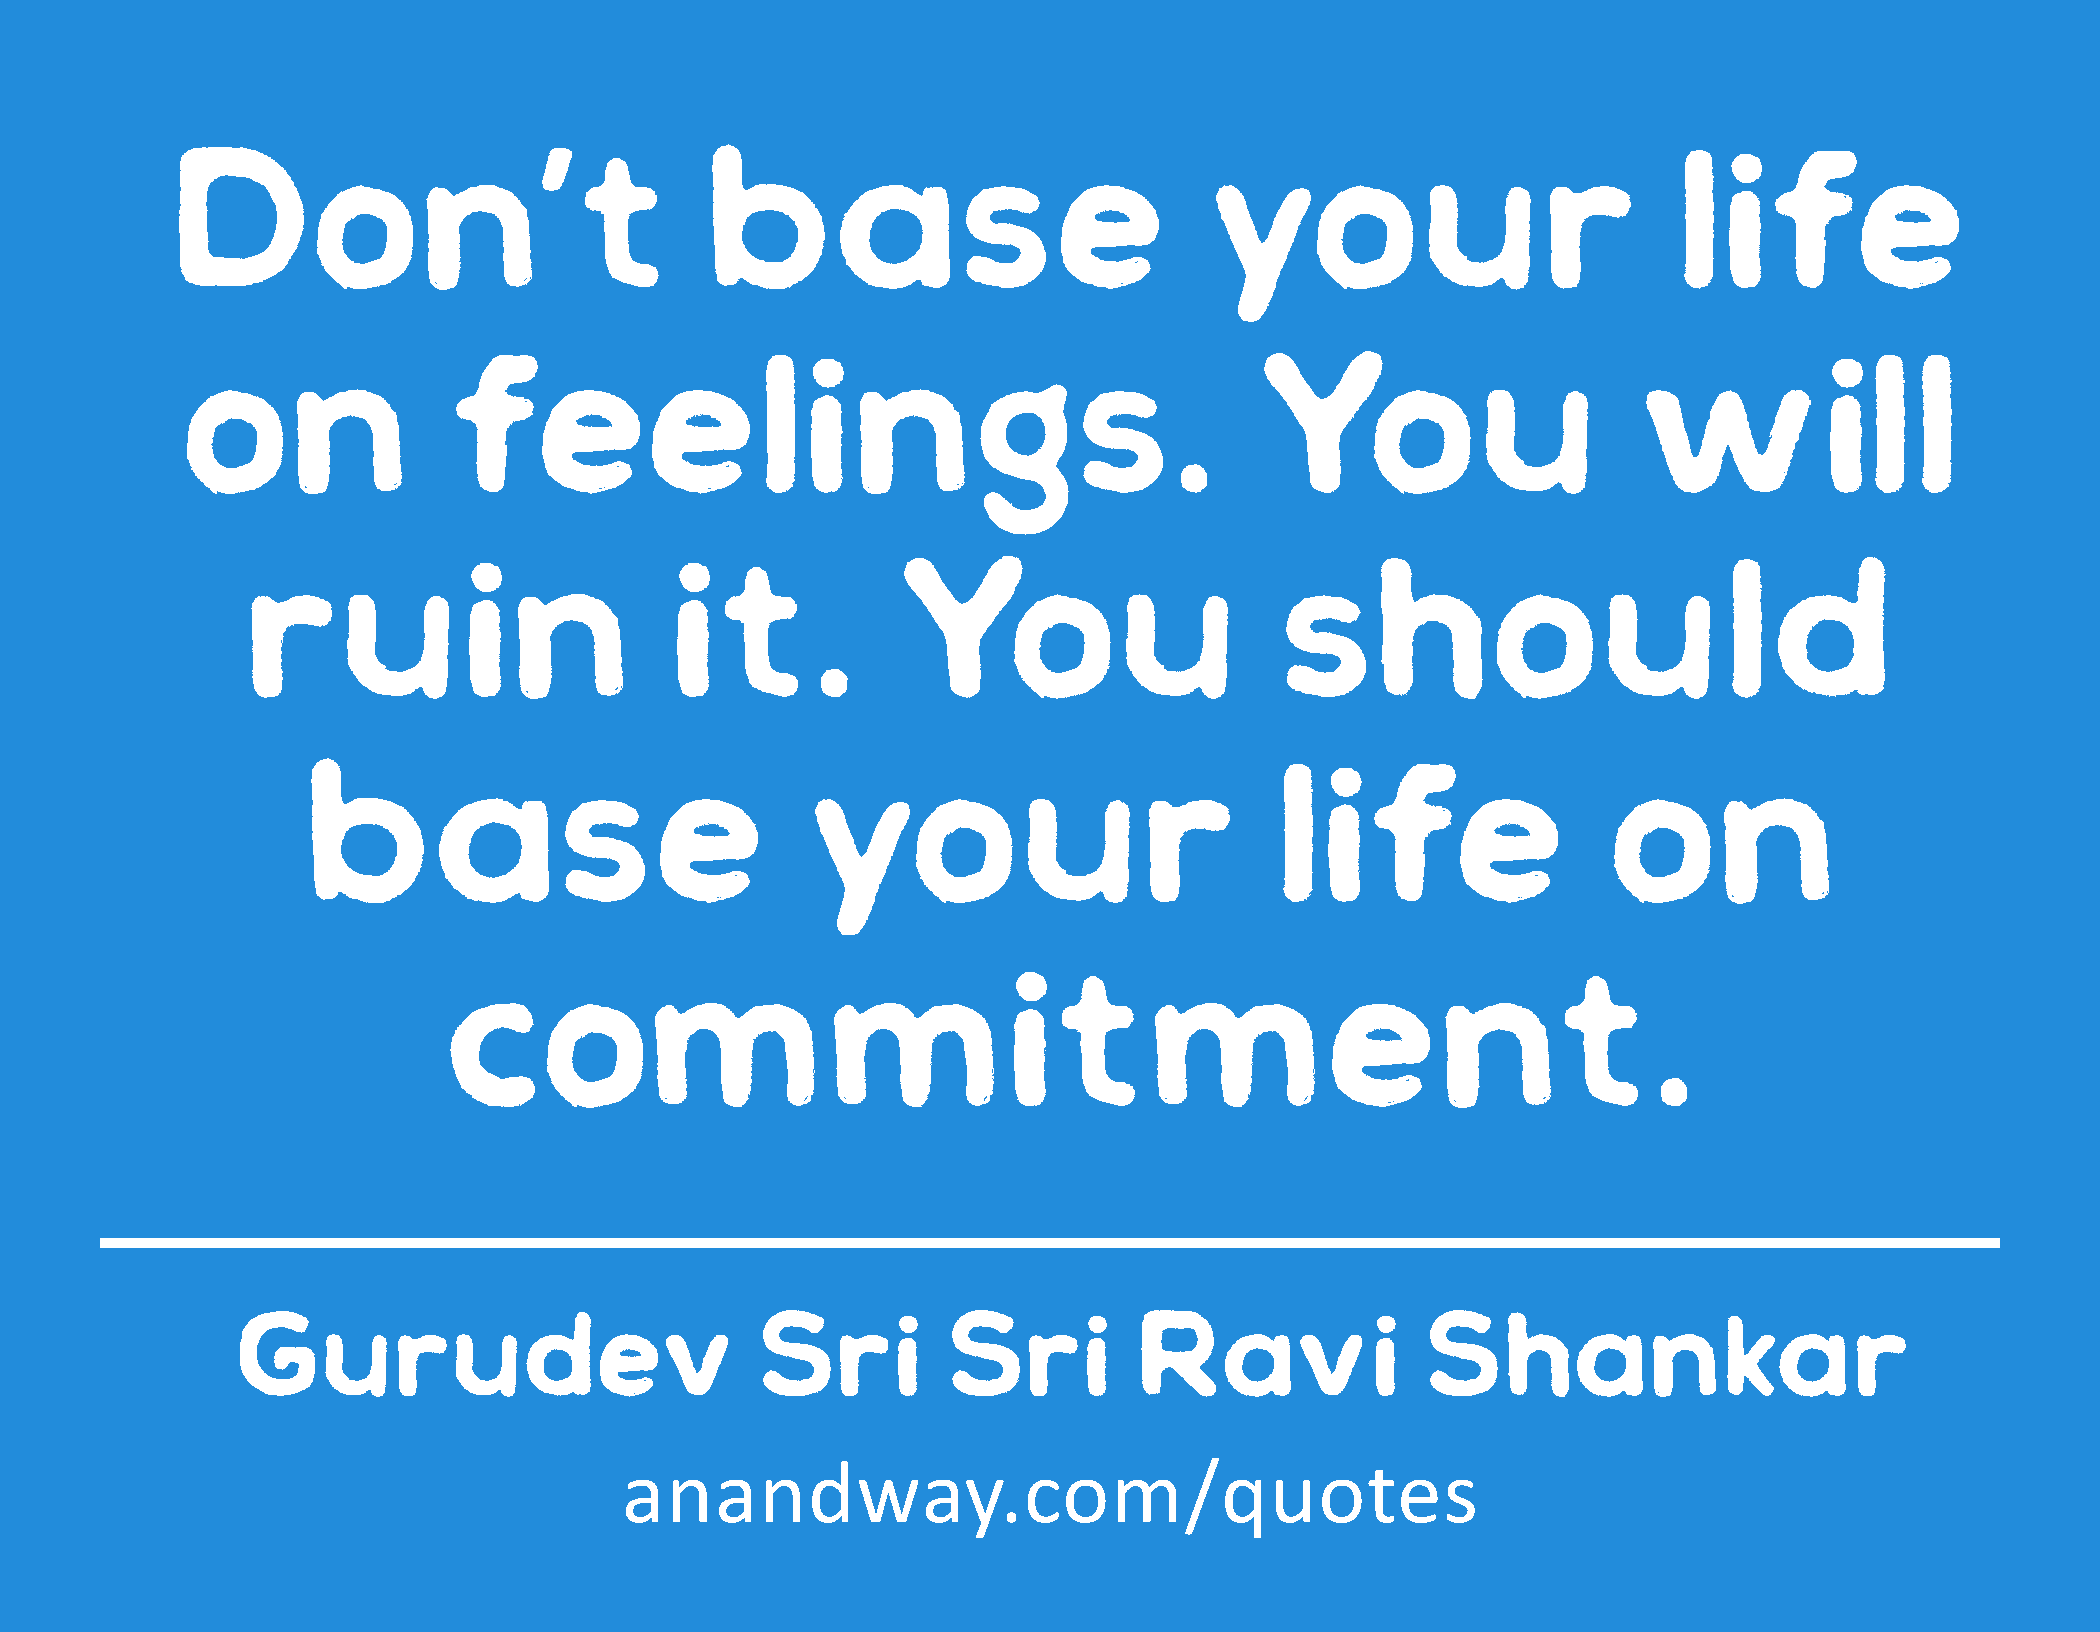 Don’t base your life on feelings. You will ruin it. You should base your life on commitment. 
 -Gurudev Sri Sri Ravi Shankar